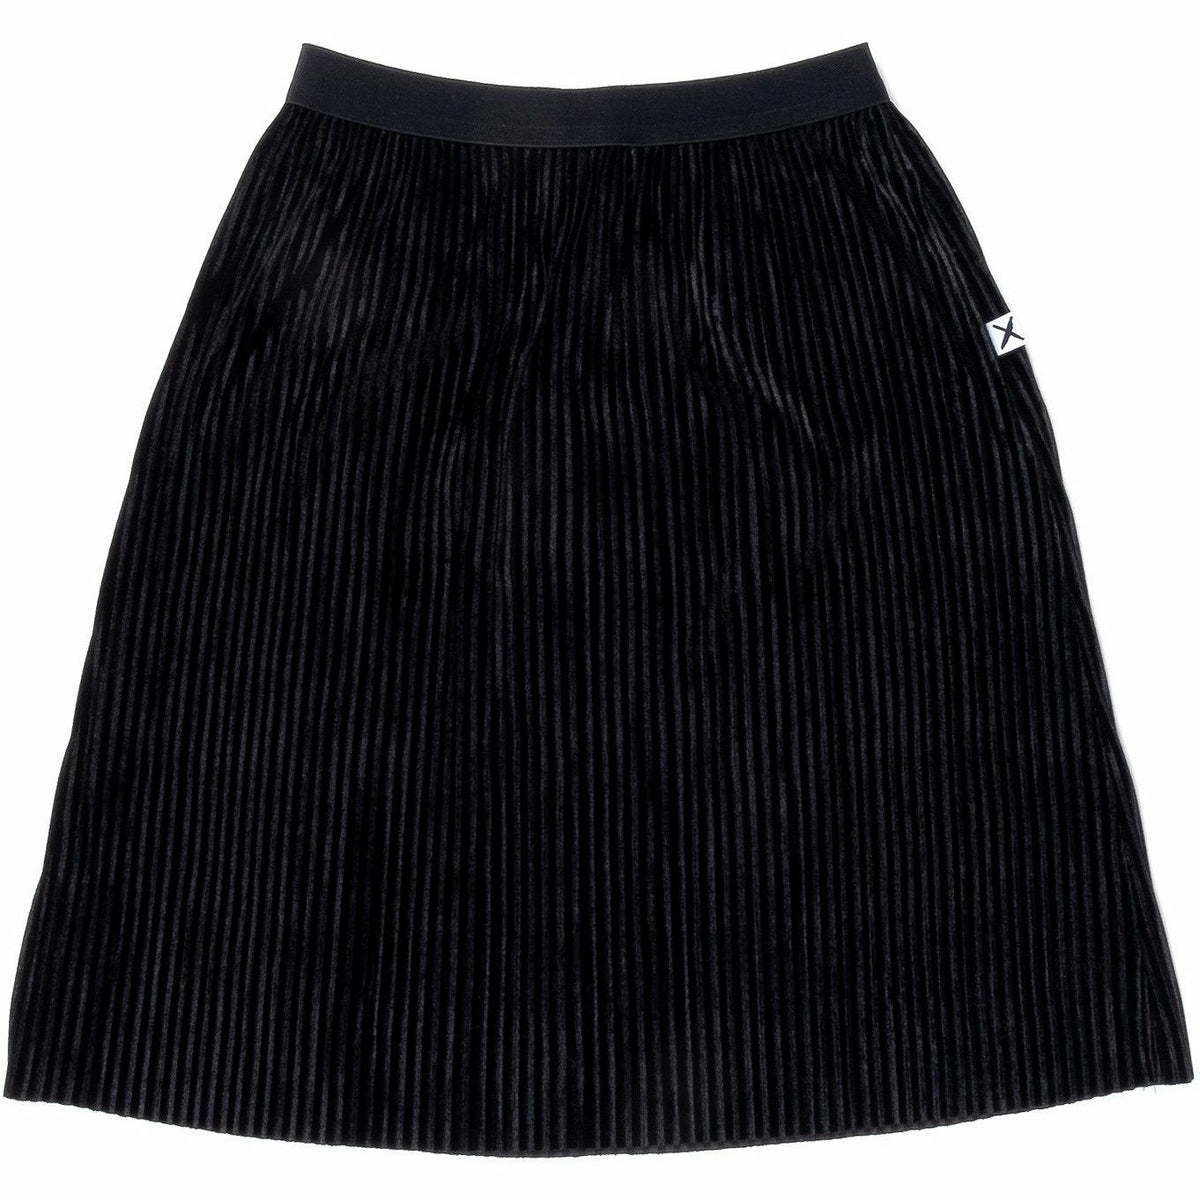 Wintery Cord Skirt - Black